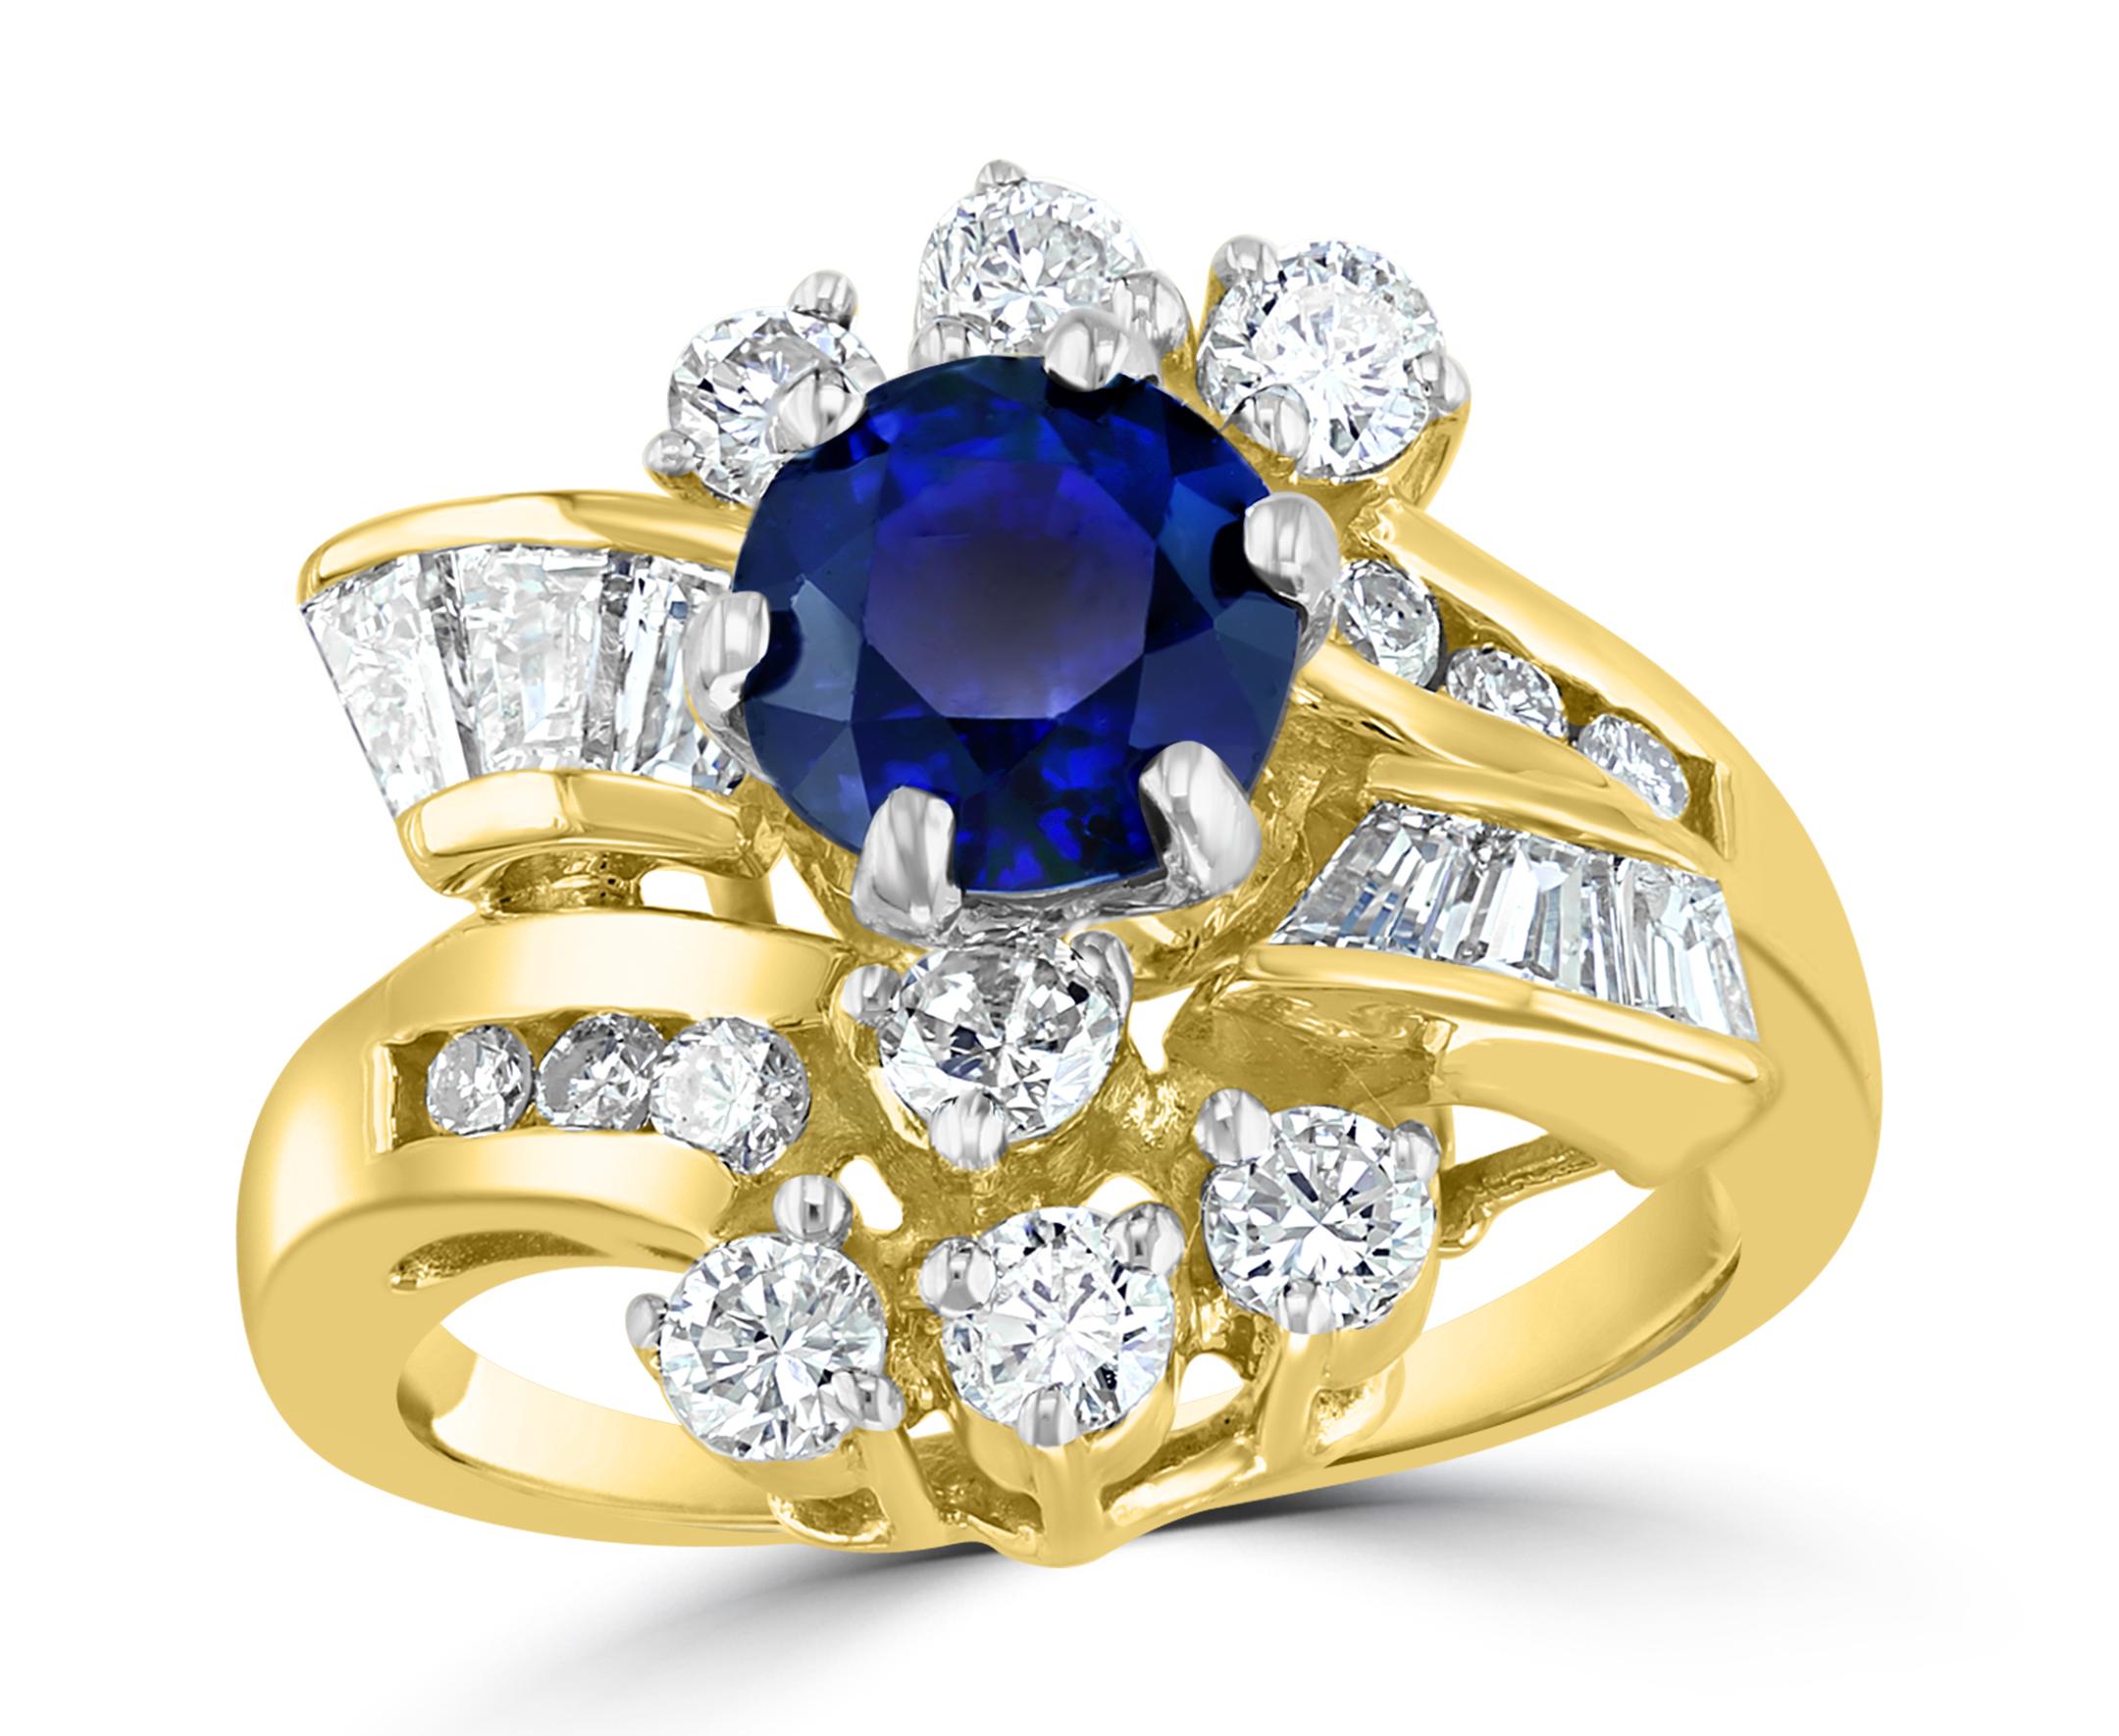 1 Carat Round Blue Sapphire & 1.65 Carat Diamond Cocktail Ring in 14 Karat Gold For Sale 11